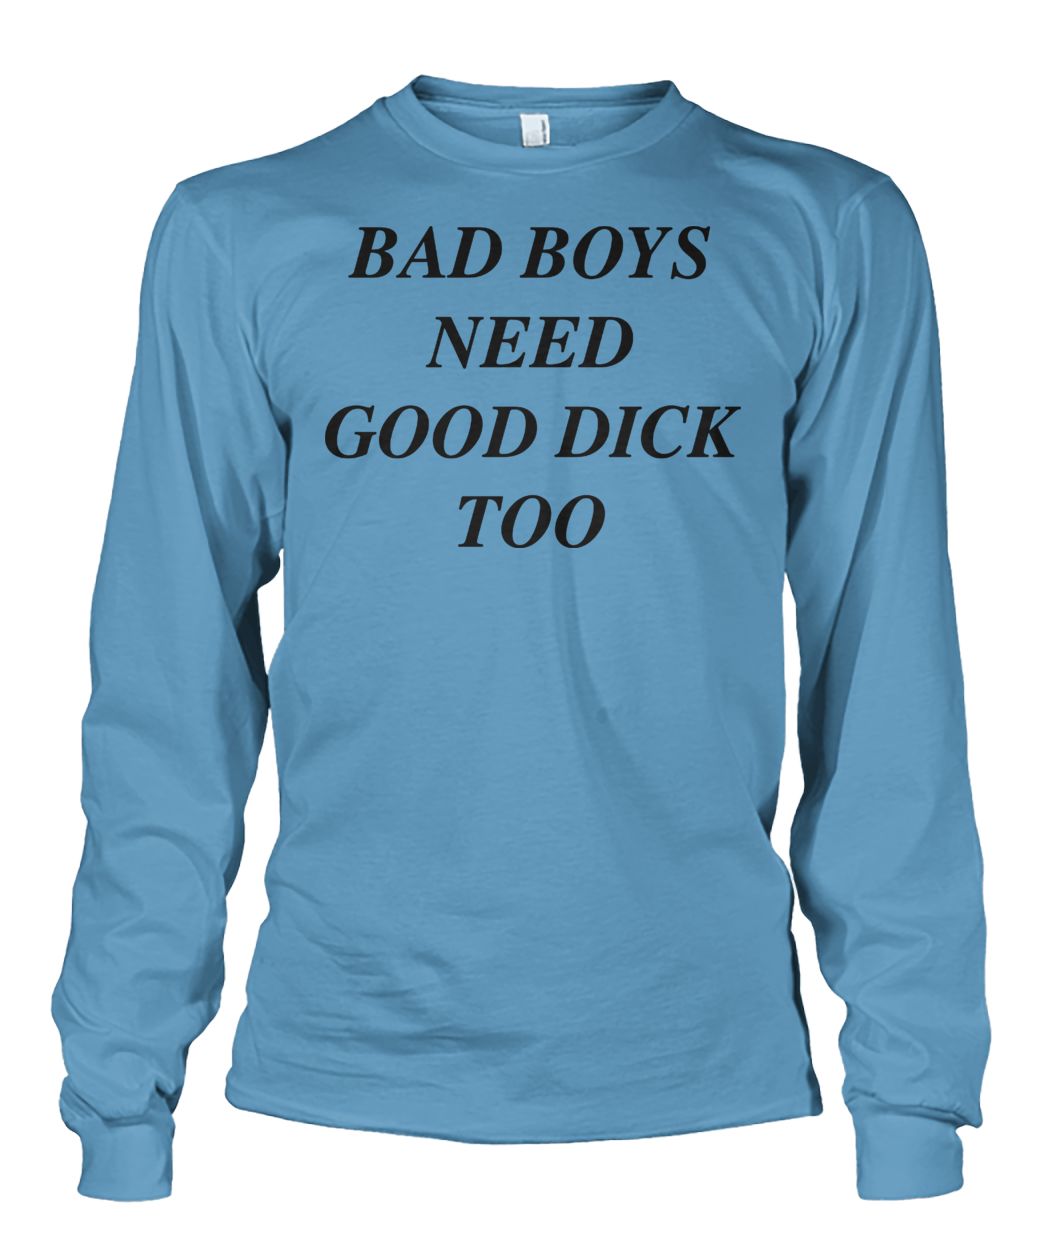 Bad boys need good dick too unisex long sleeve